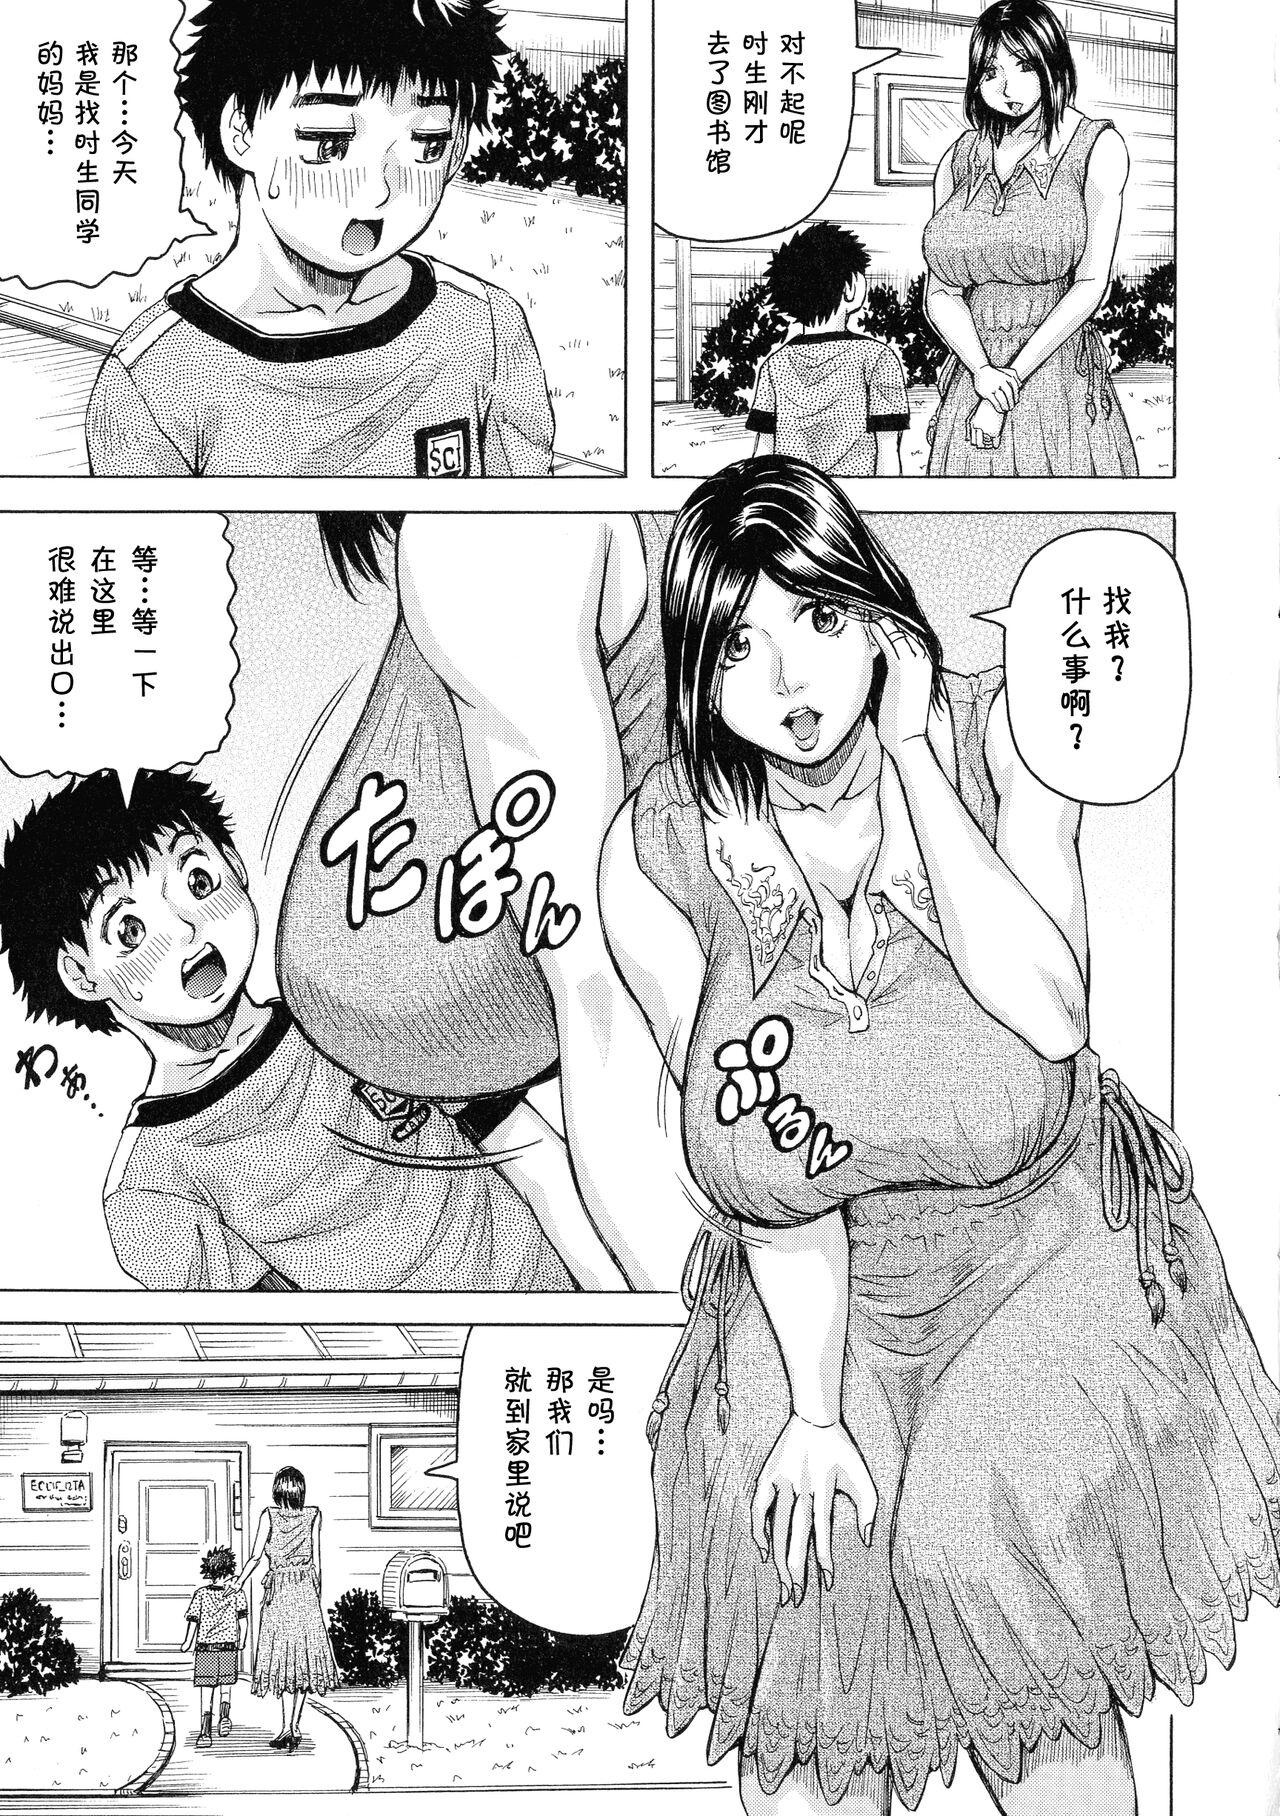 Home Hamegaki x Yaritsuma Juicy - Page 11